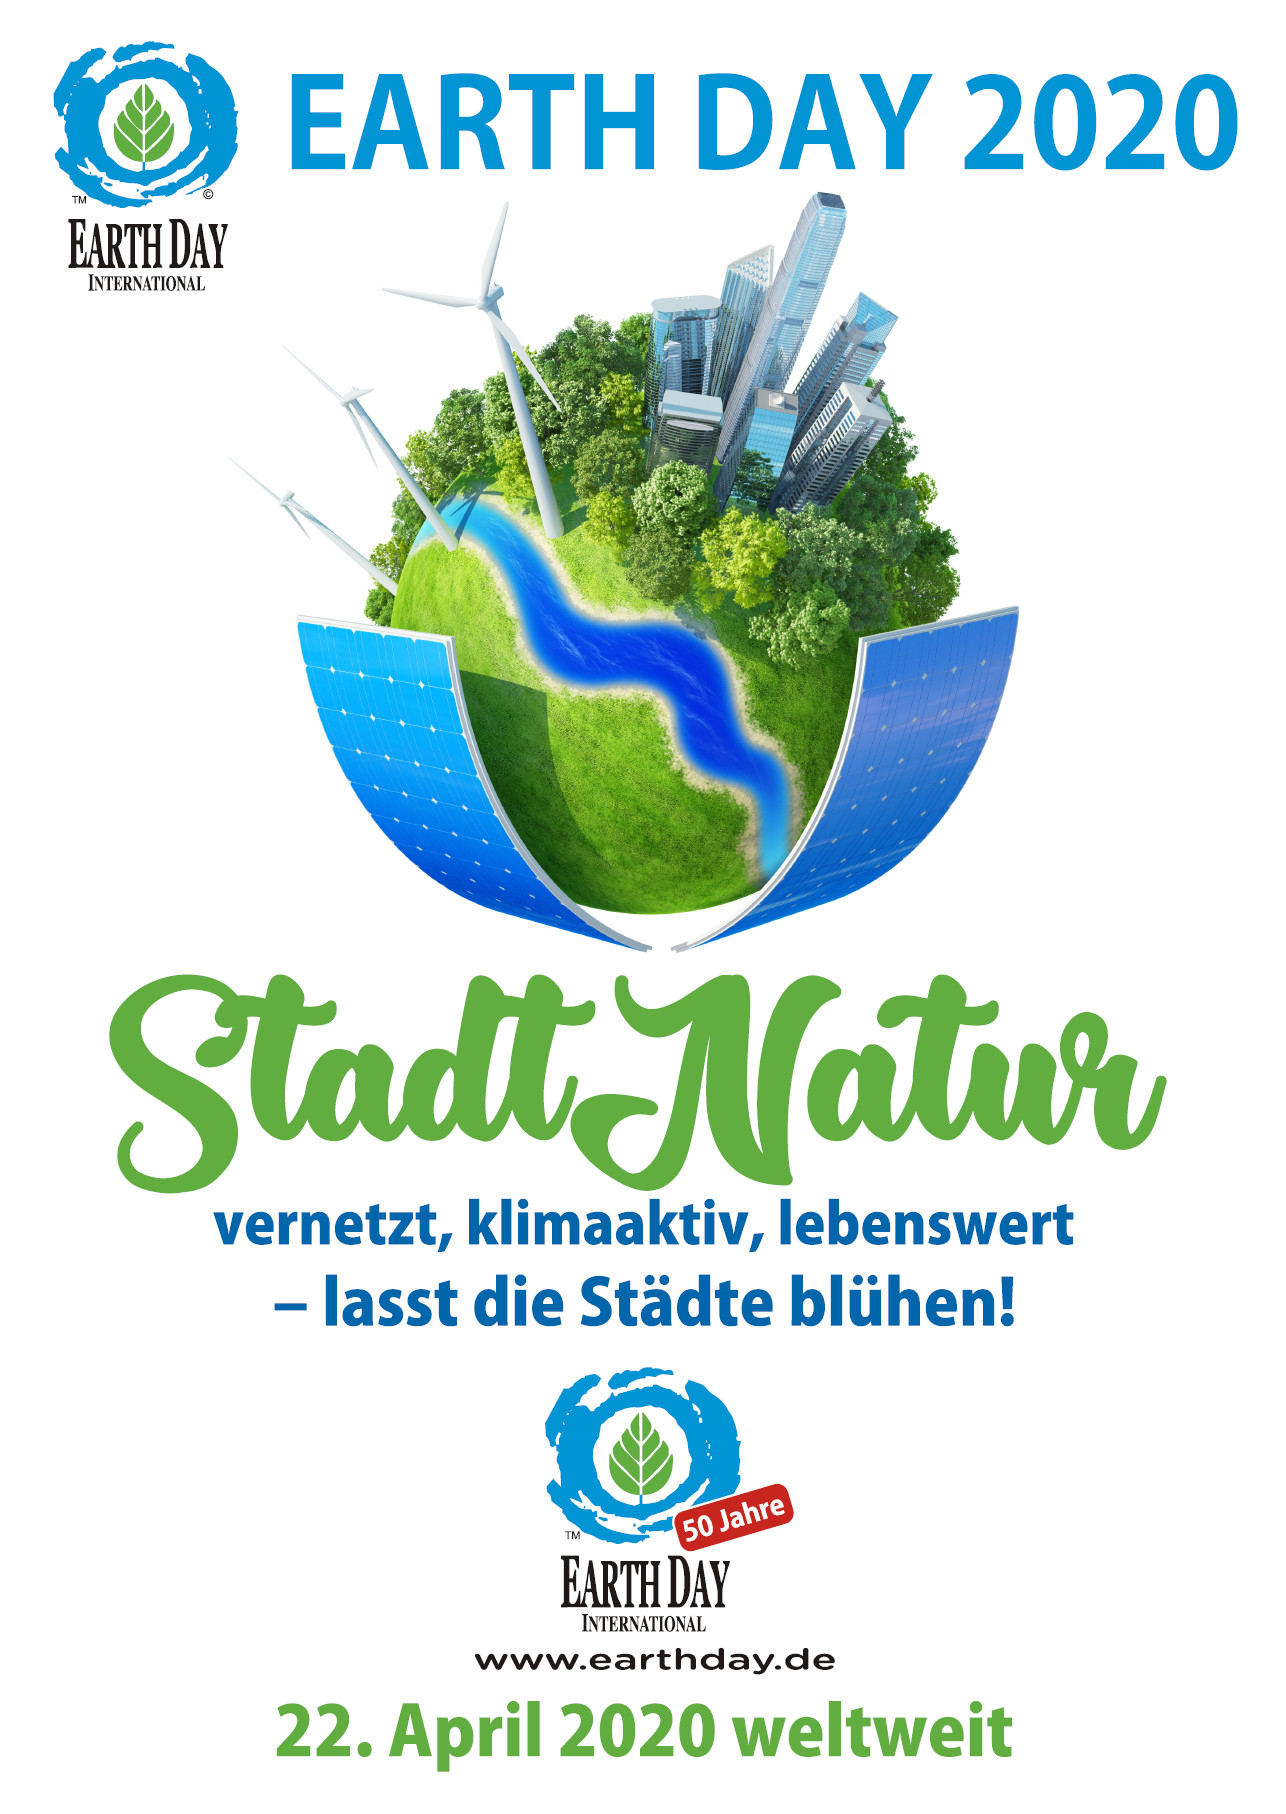 Earth Day 2020: StadtNatur